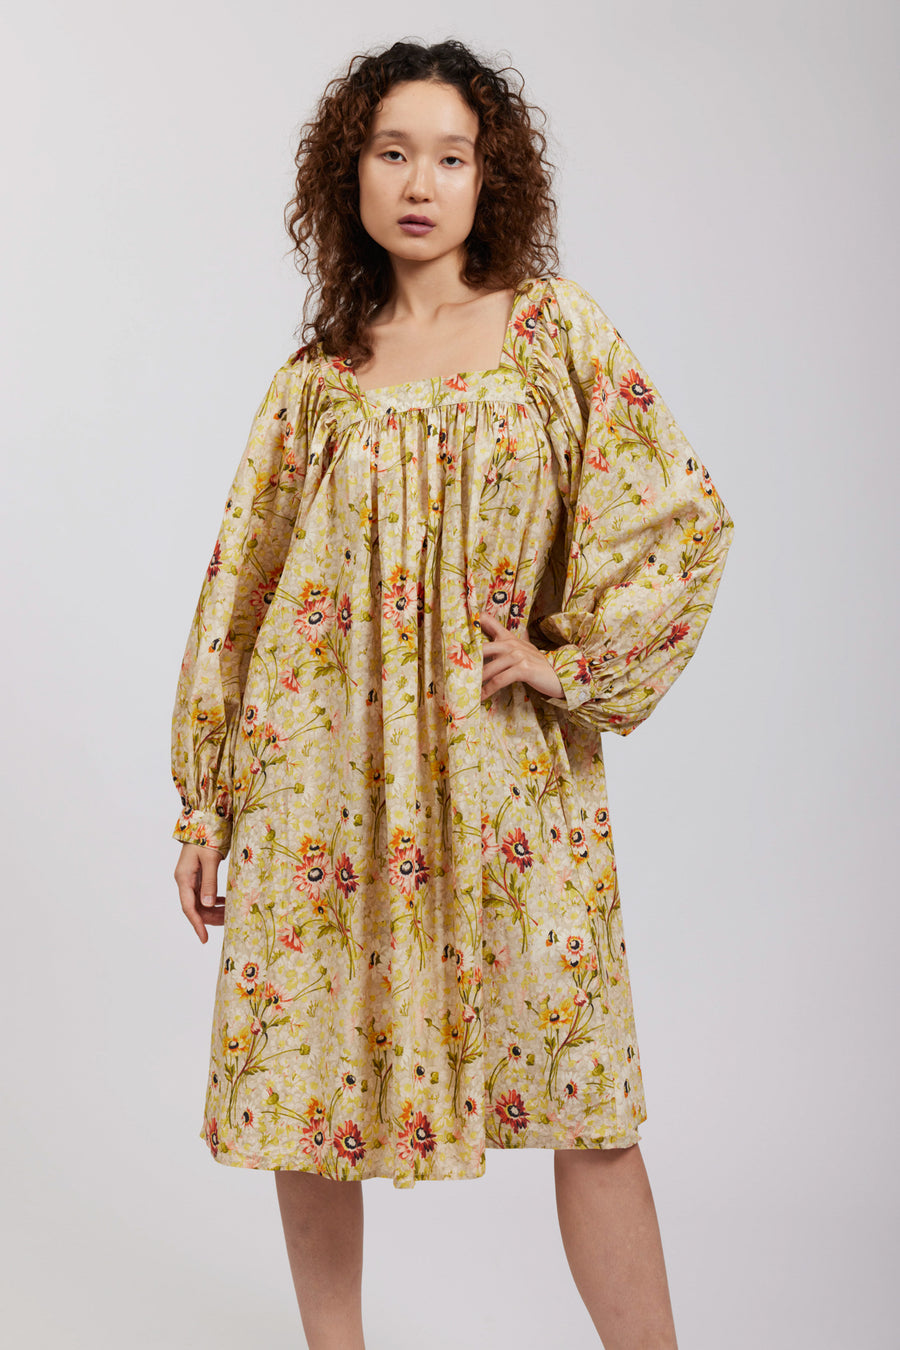 Laura Ashley x BATSHEVA Beaumaris Dress in Witton Floral